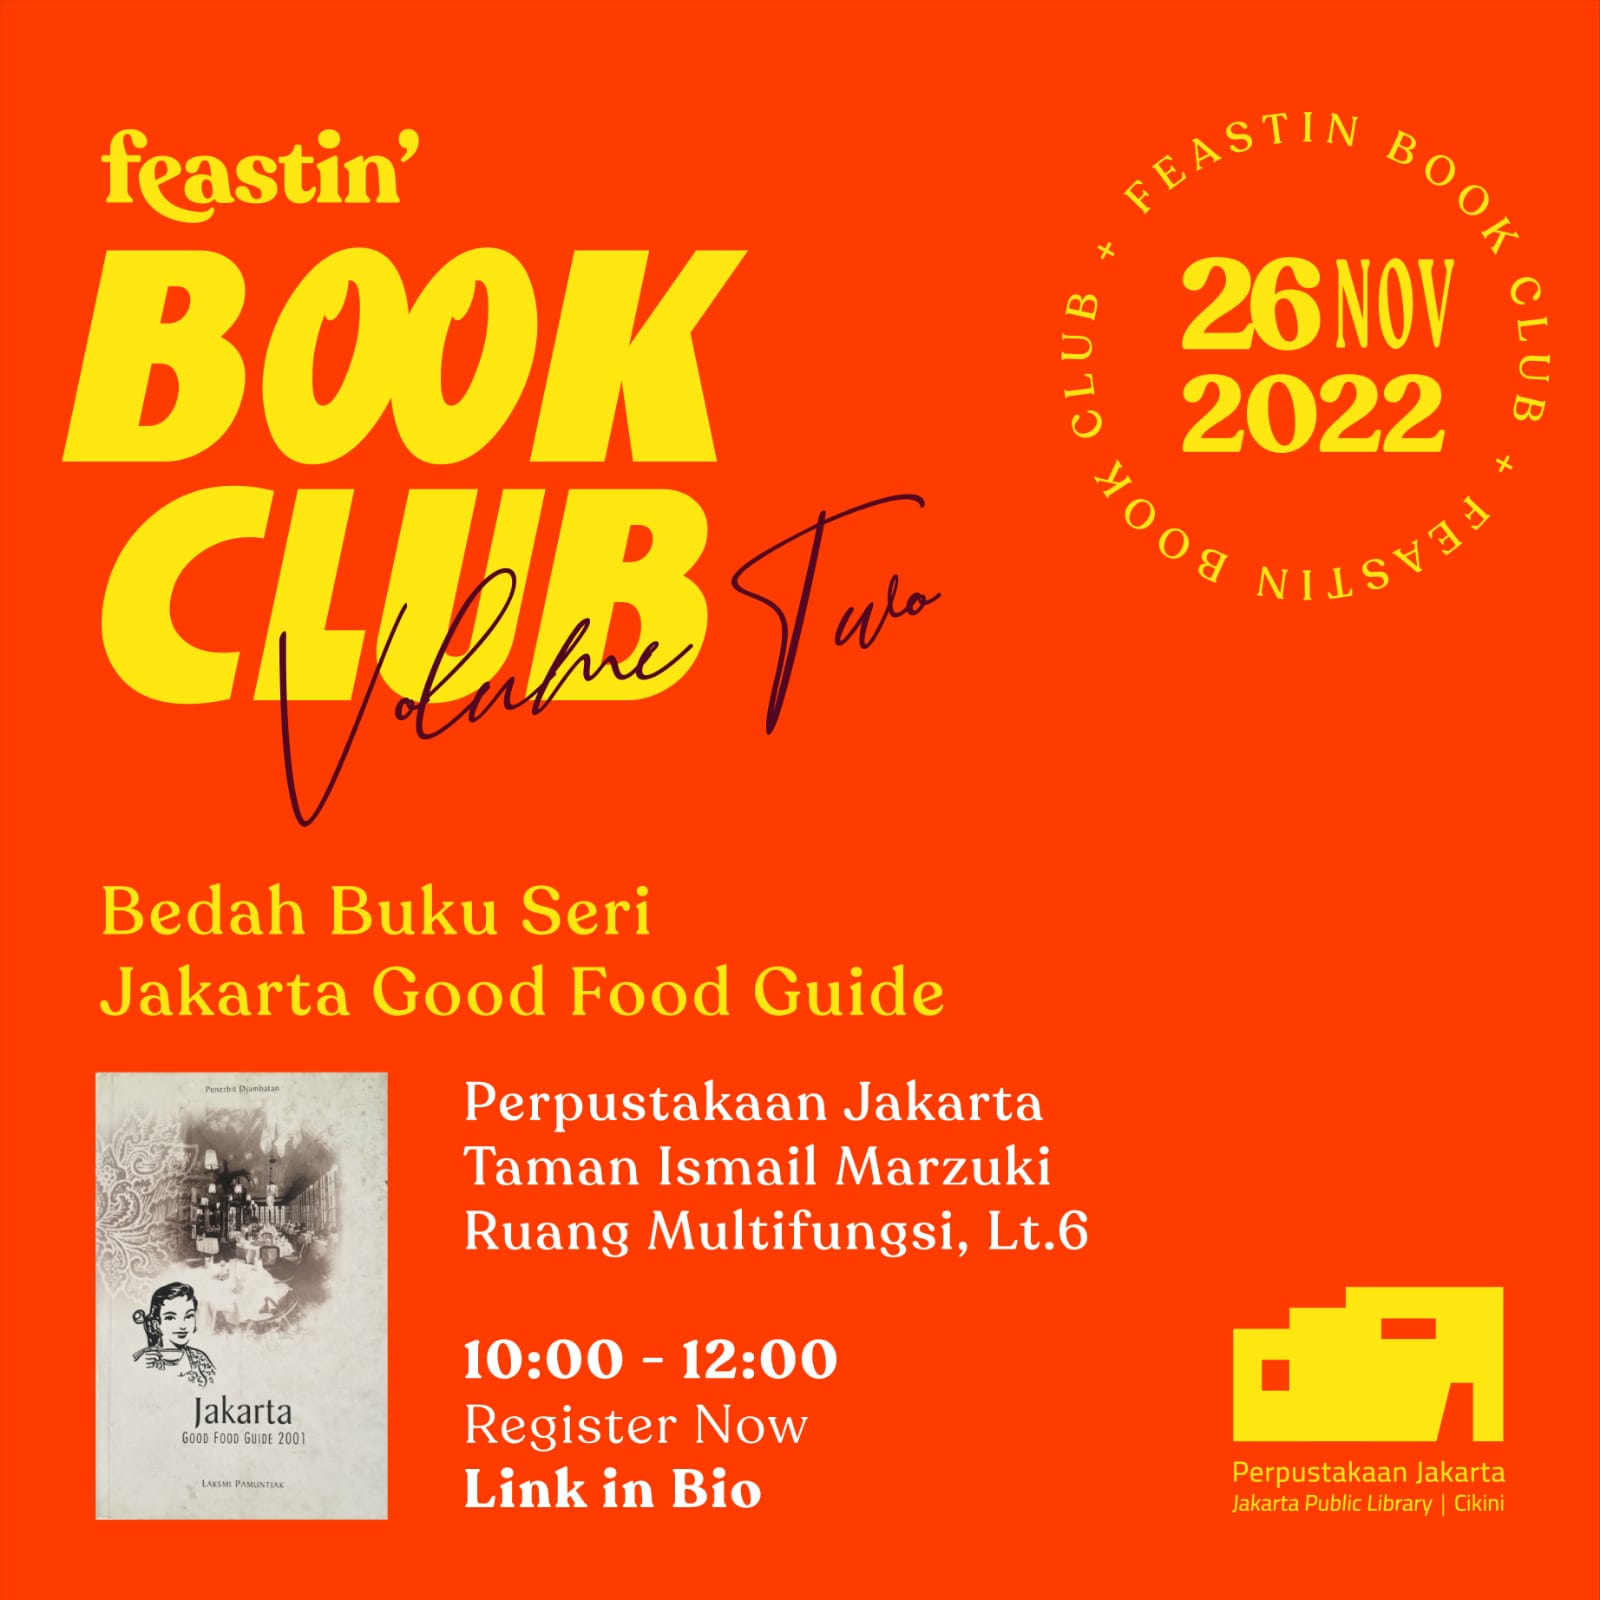 Feastin Book Club Bedah Buku Seri Jakarta Good Food Guide